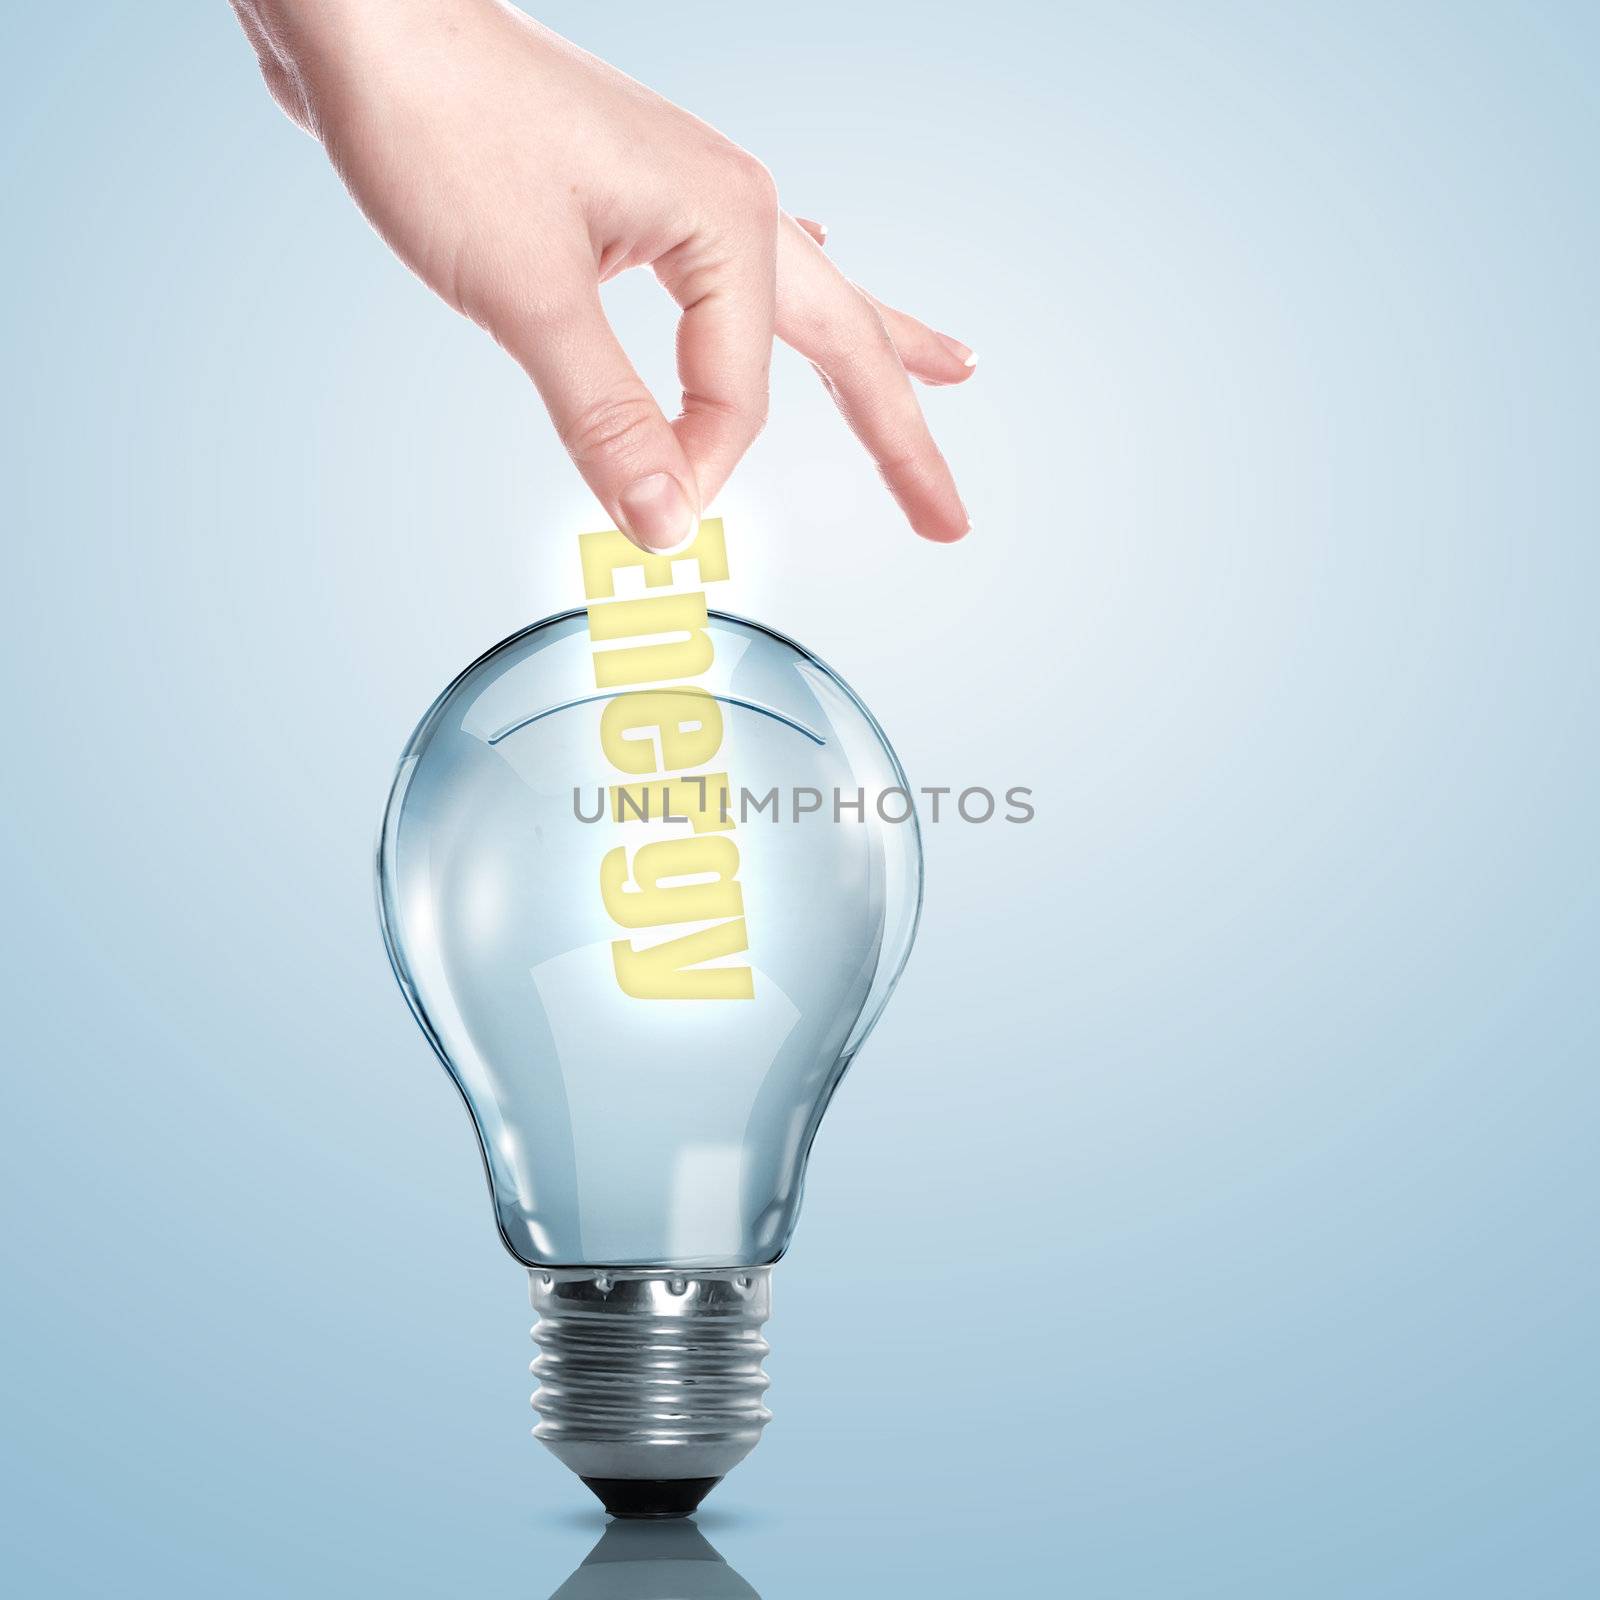 Electric bulb illustration by sergey_nivens